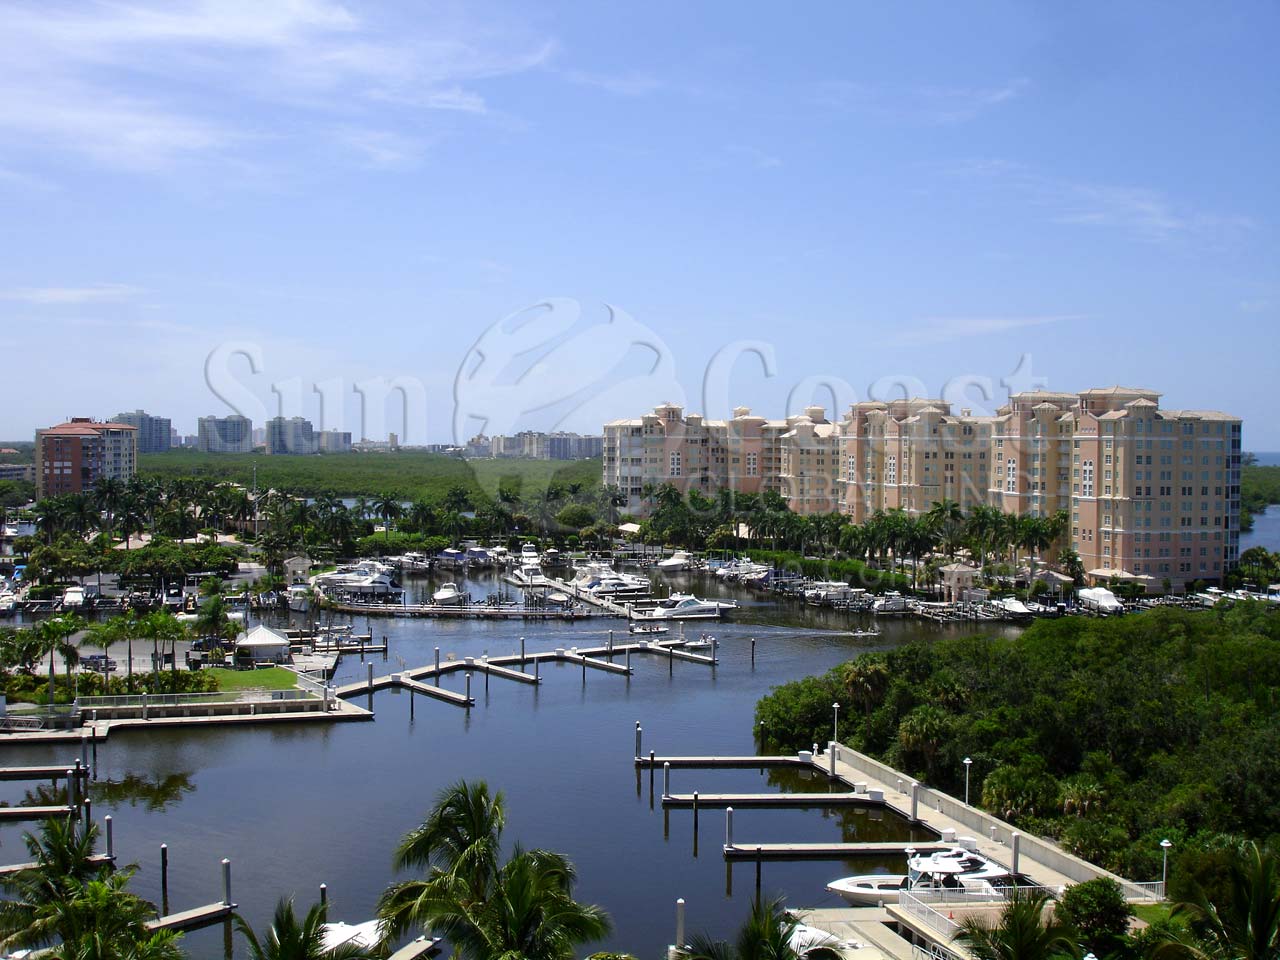 PELICAN ISLE Condominiums Overlooking the Water